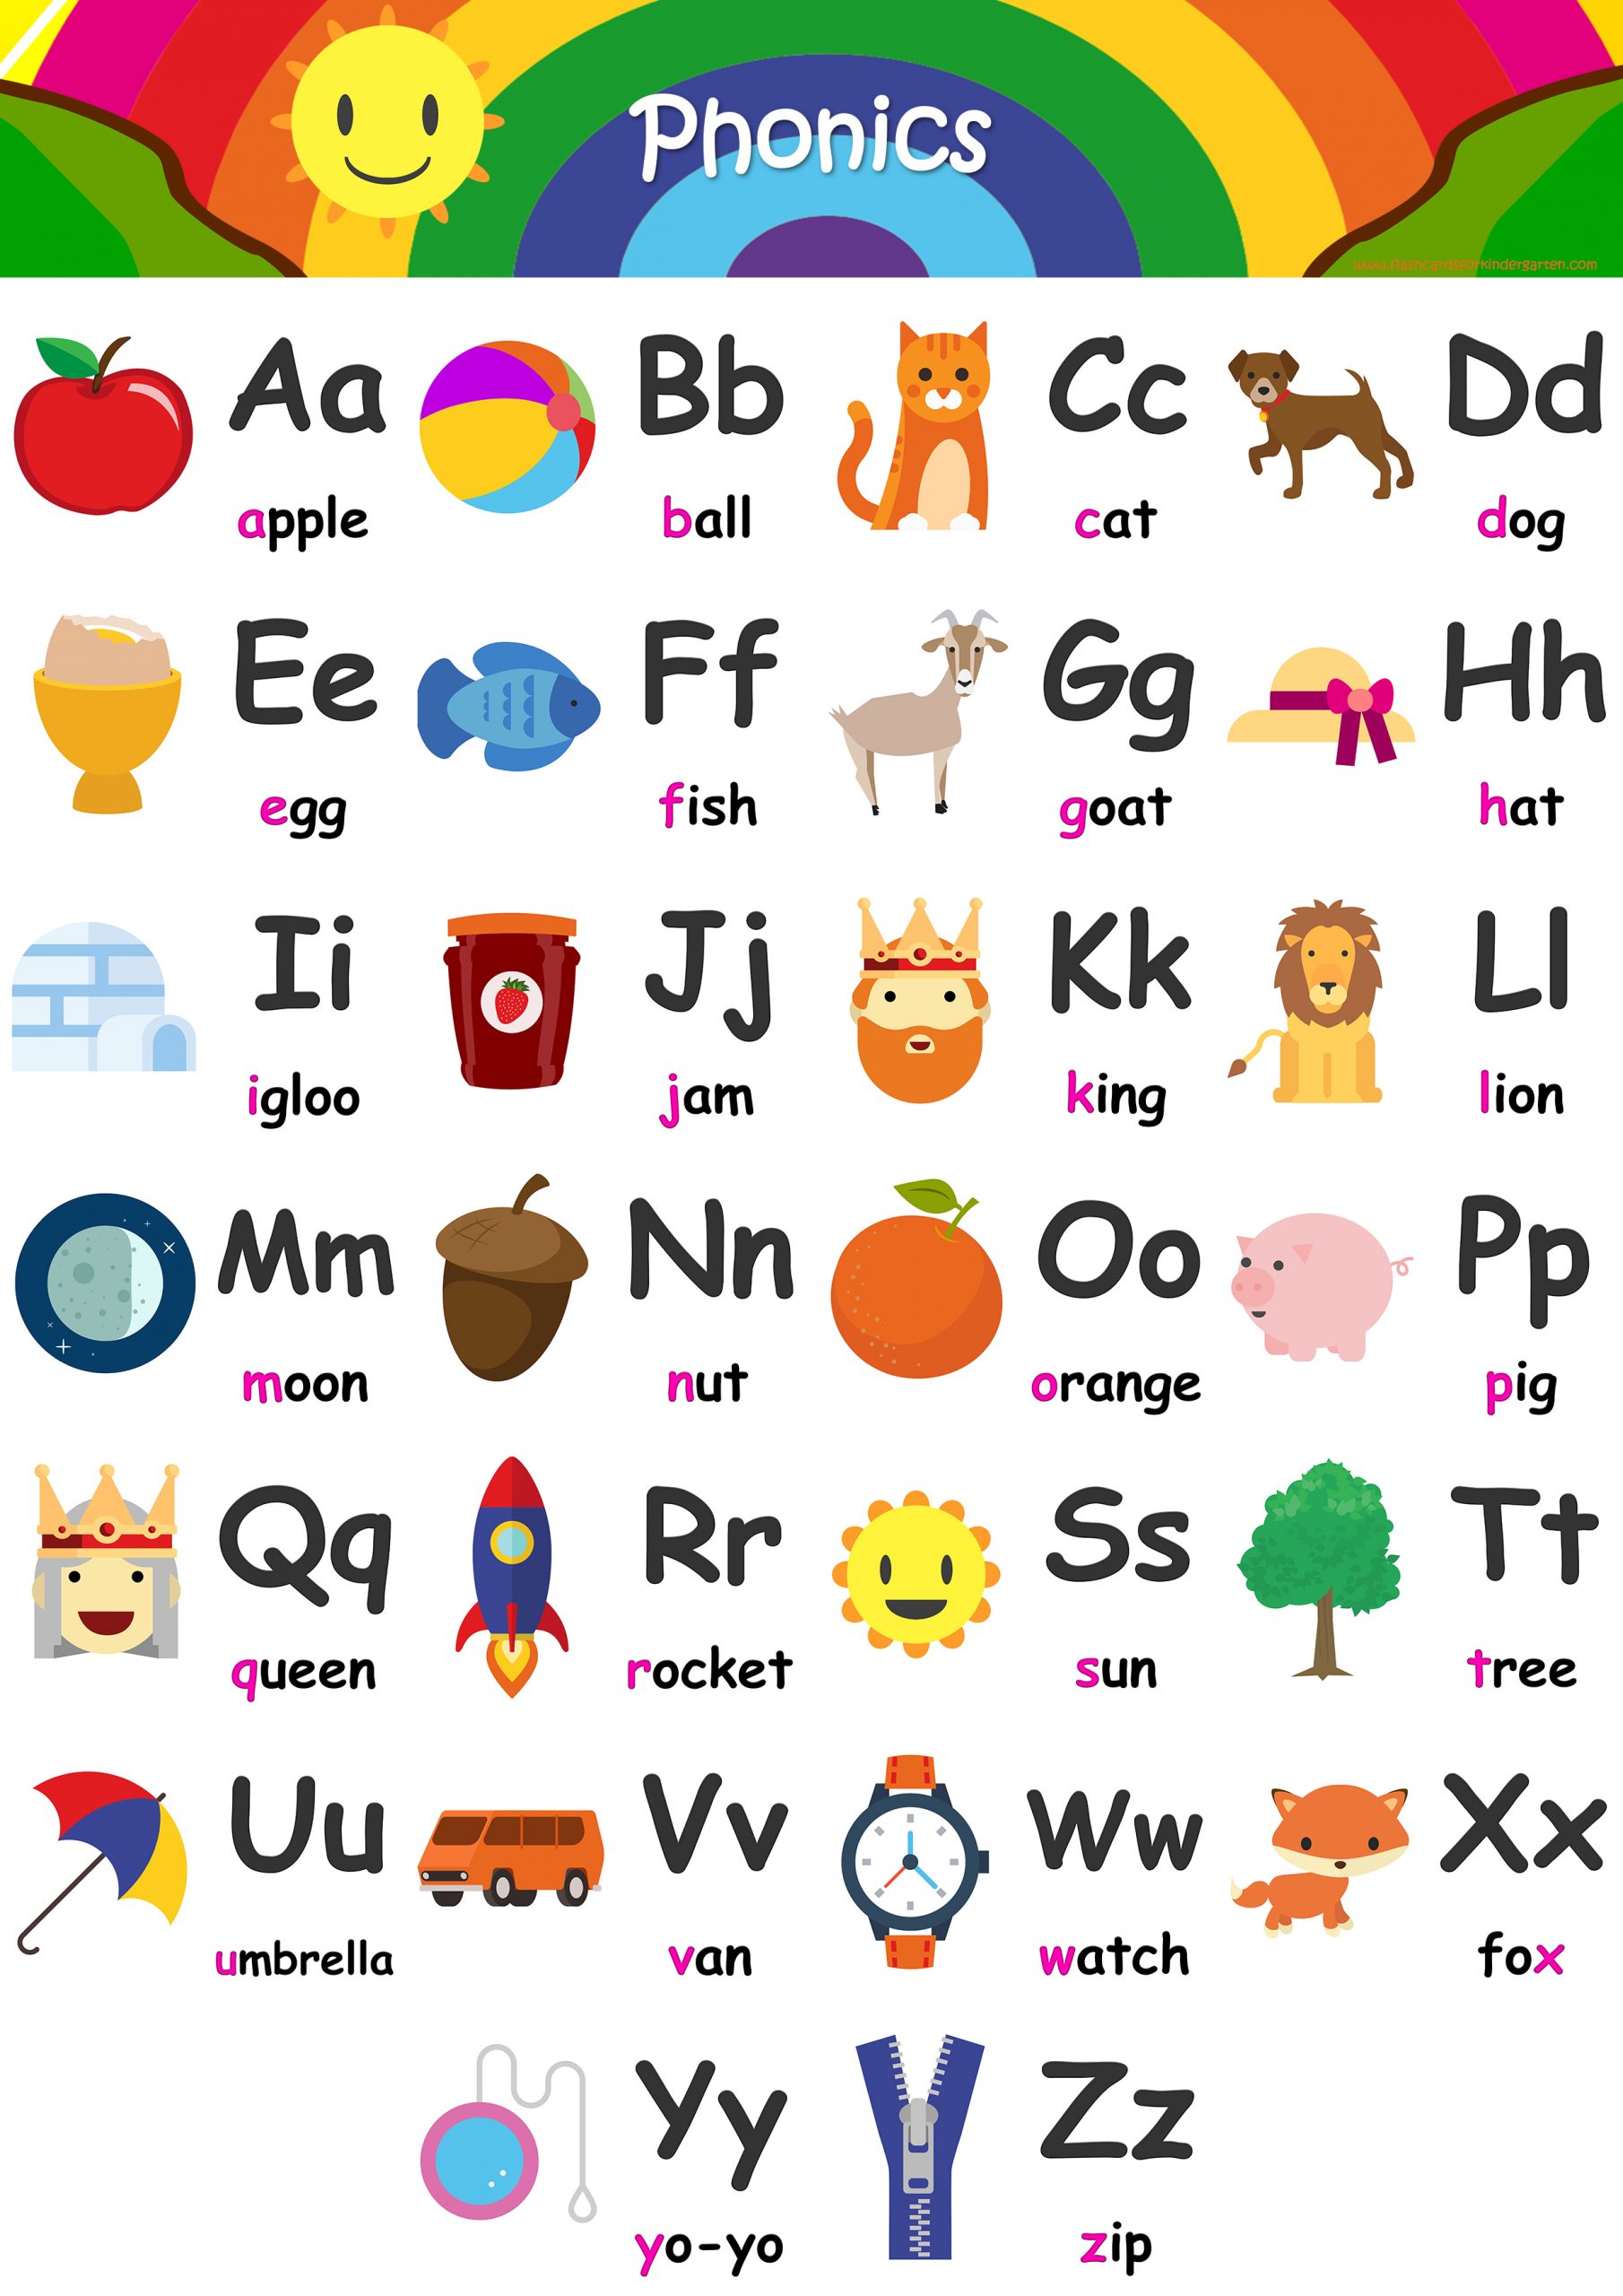 english spelling alphabet table